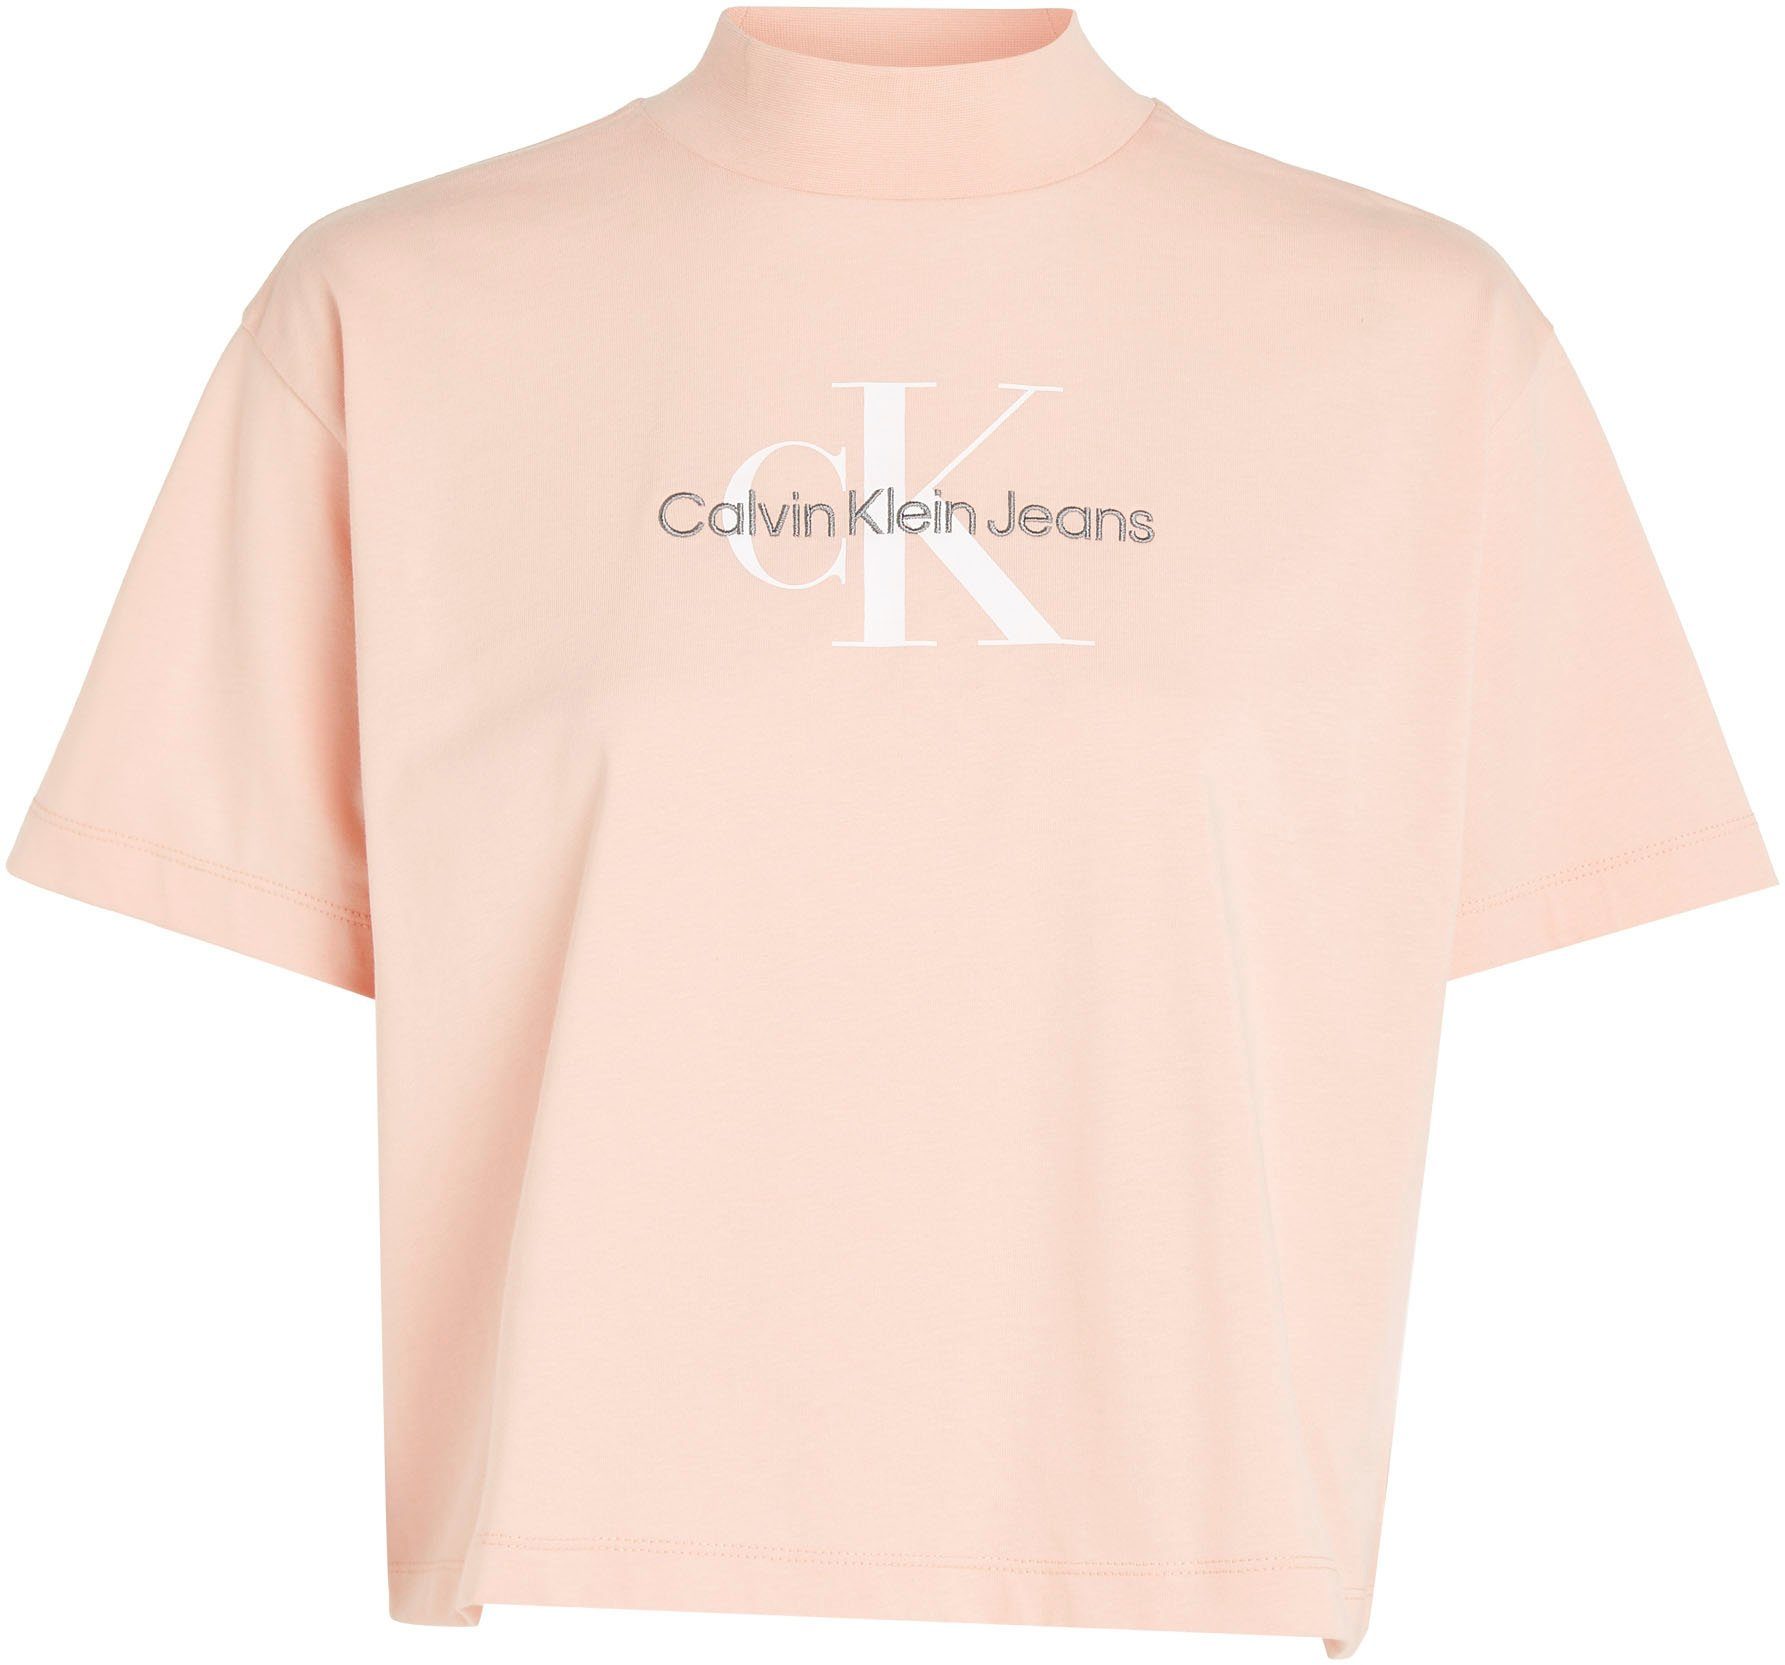 Faint Calvin TEE Klein ARCHIVAL Jeans Blossom MONOLOGO T-Shirt